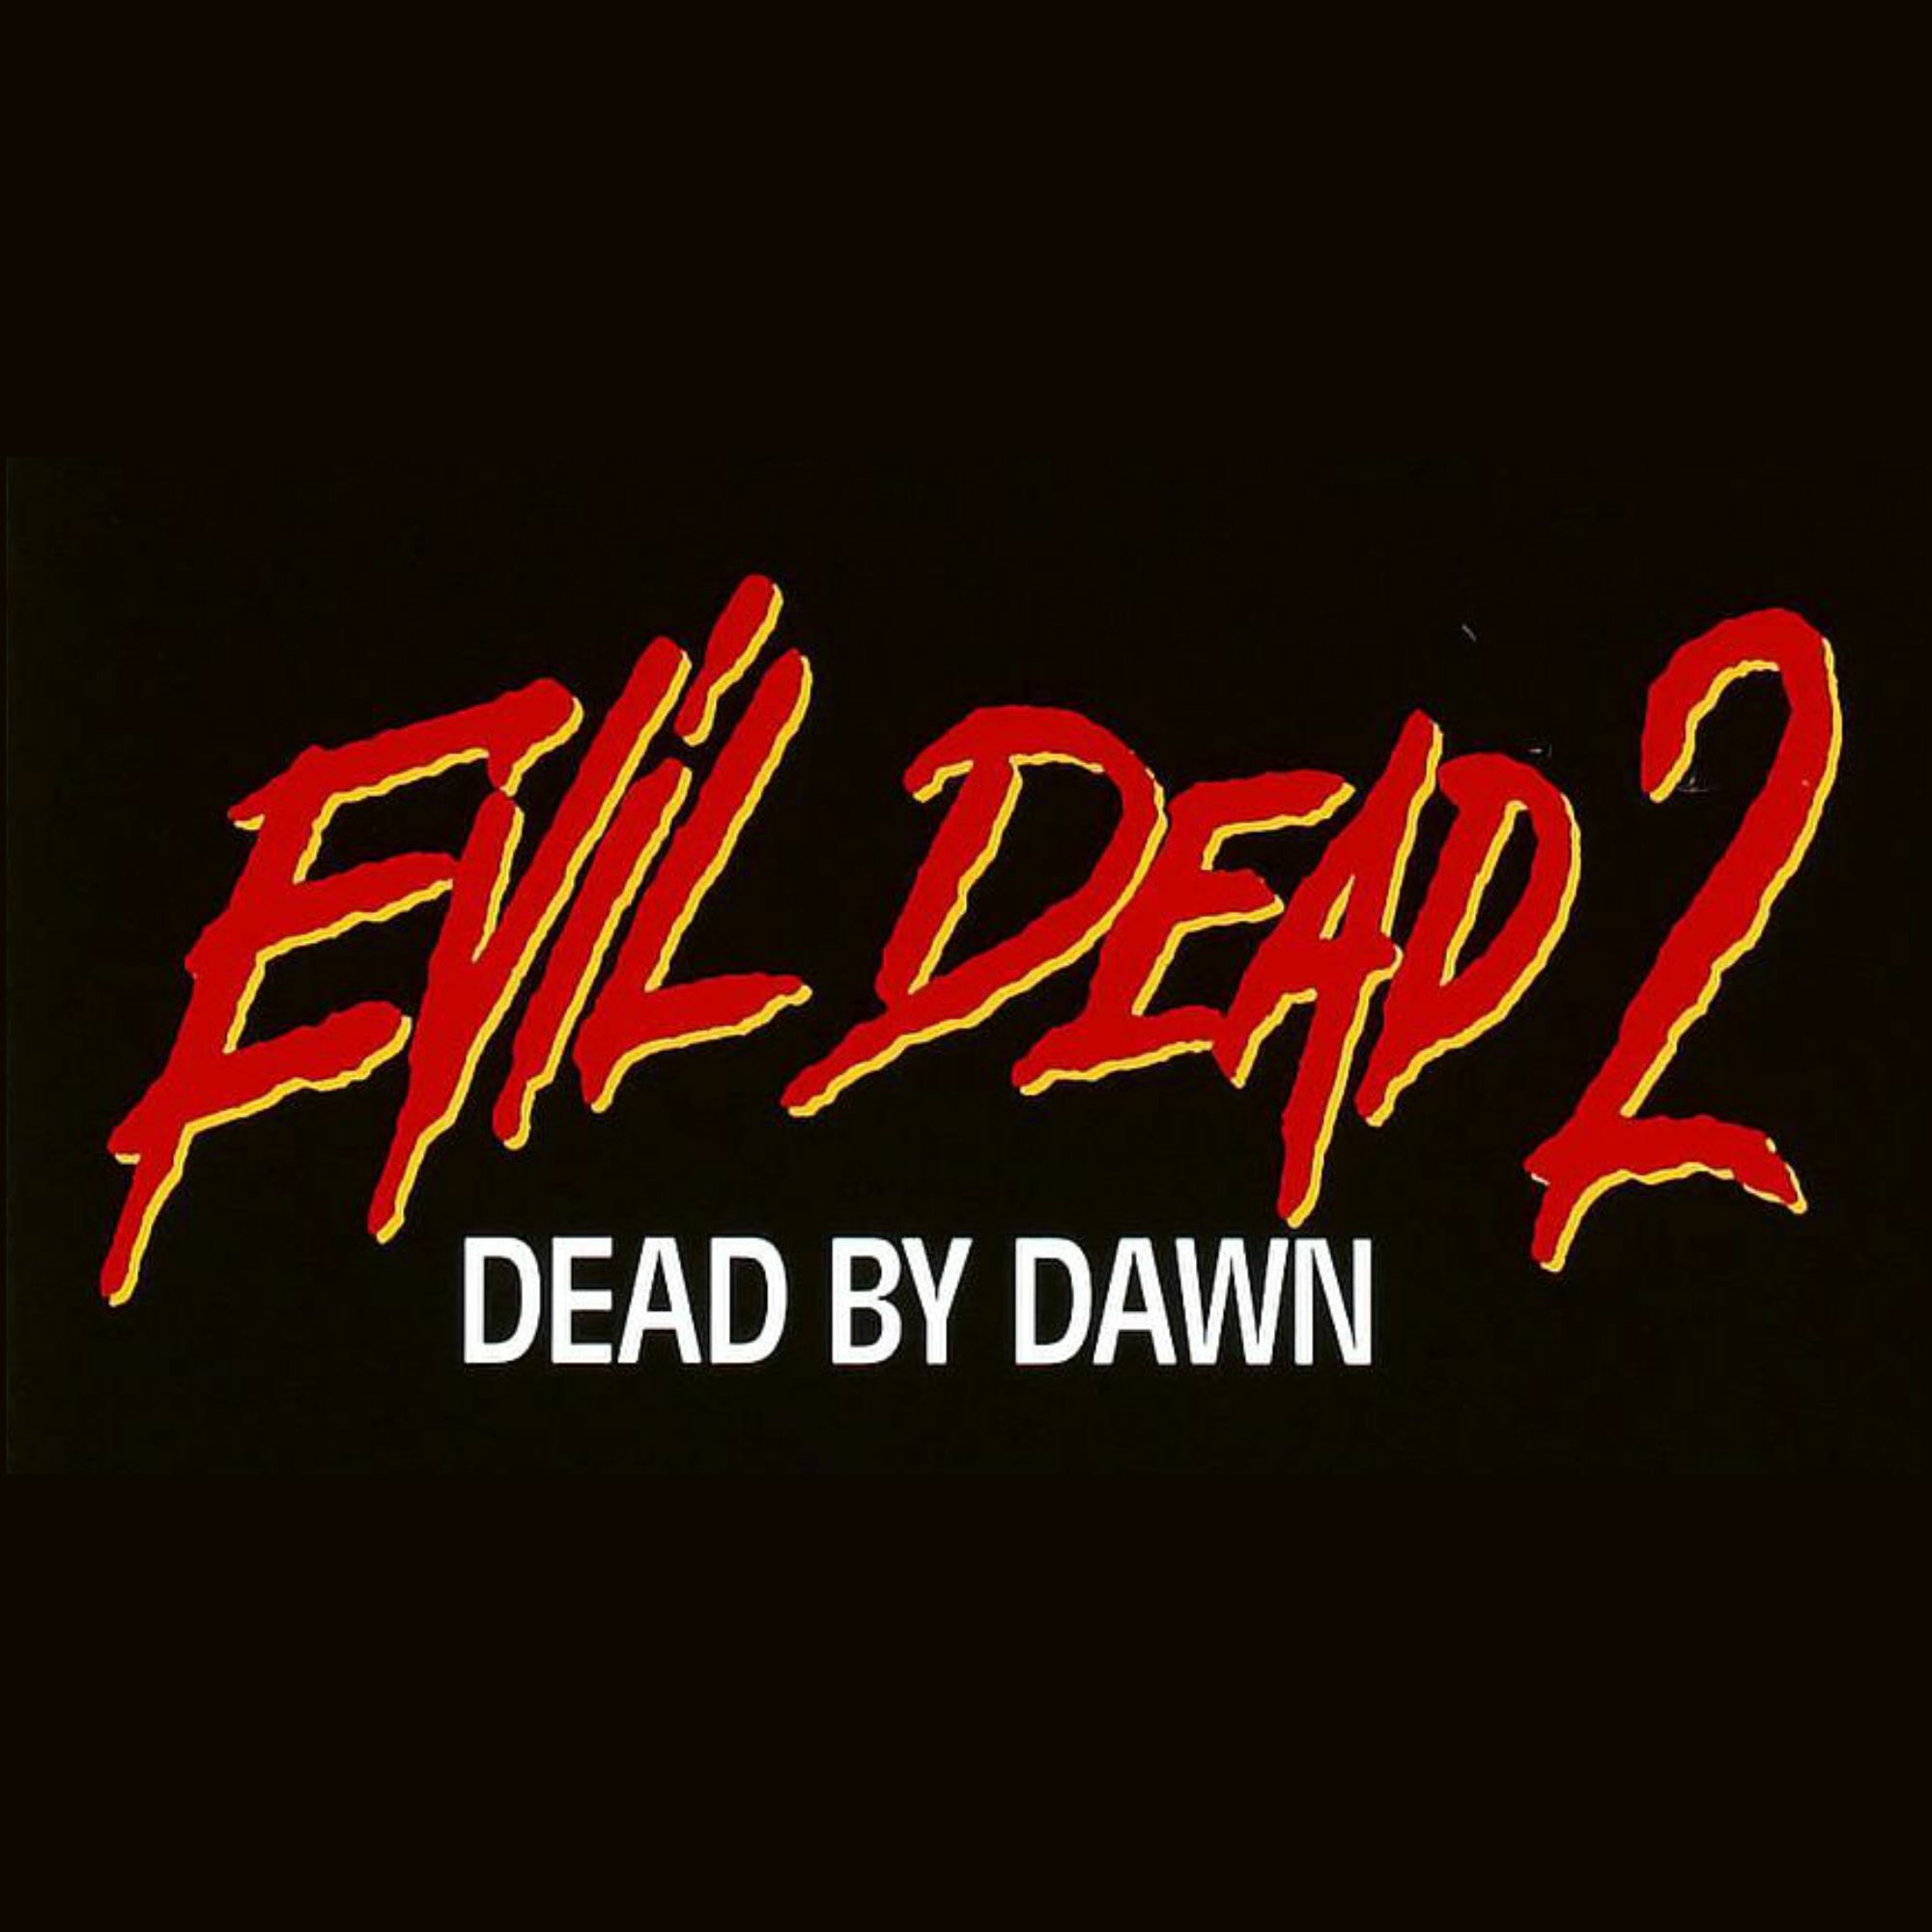 Evil Dead 2